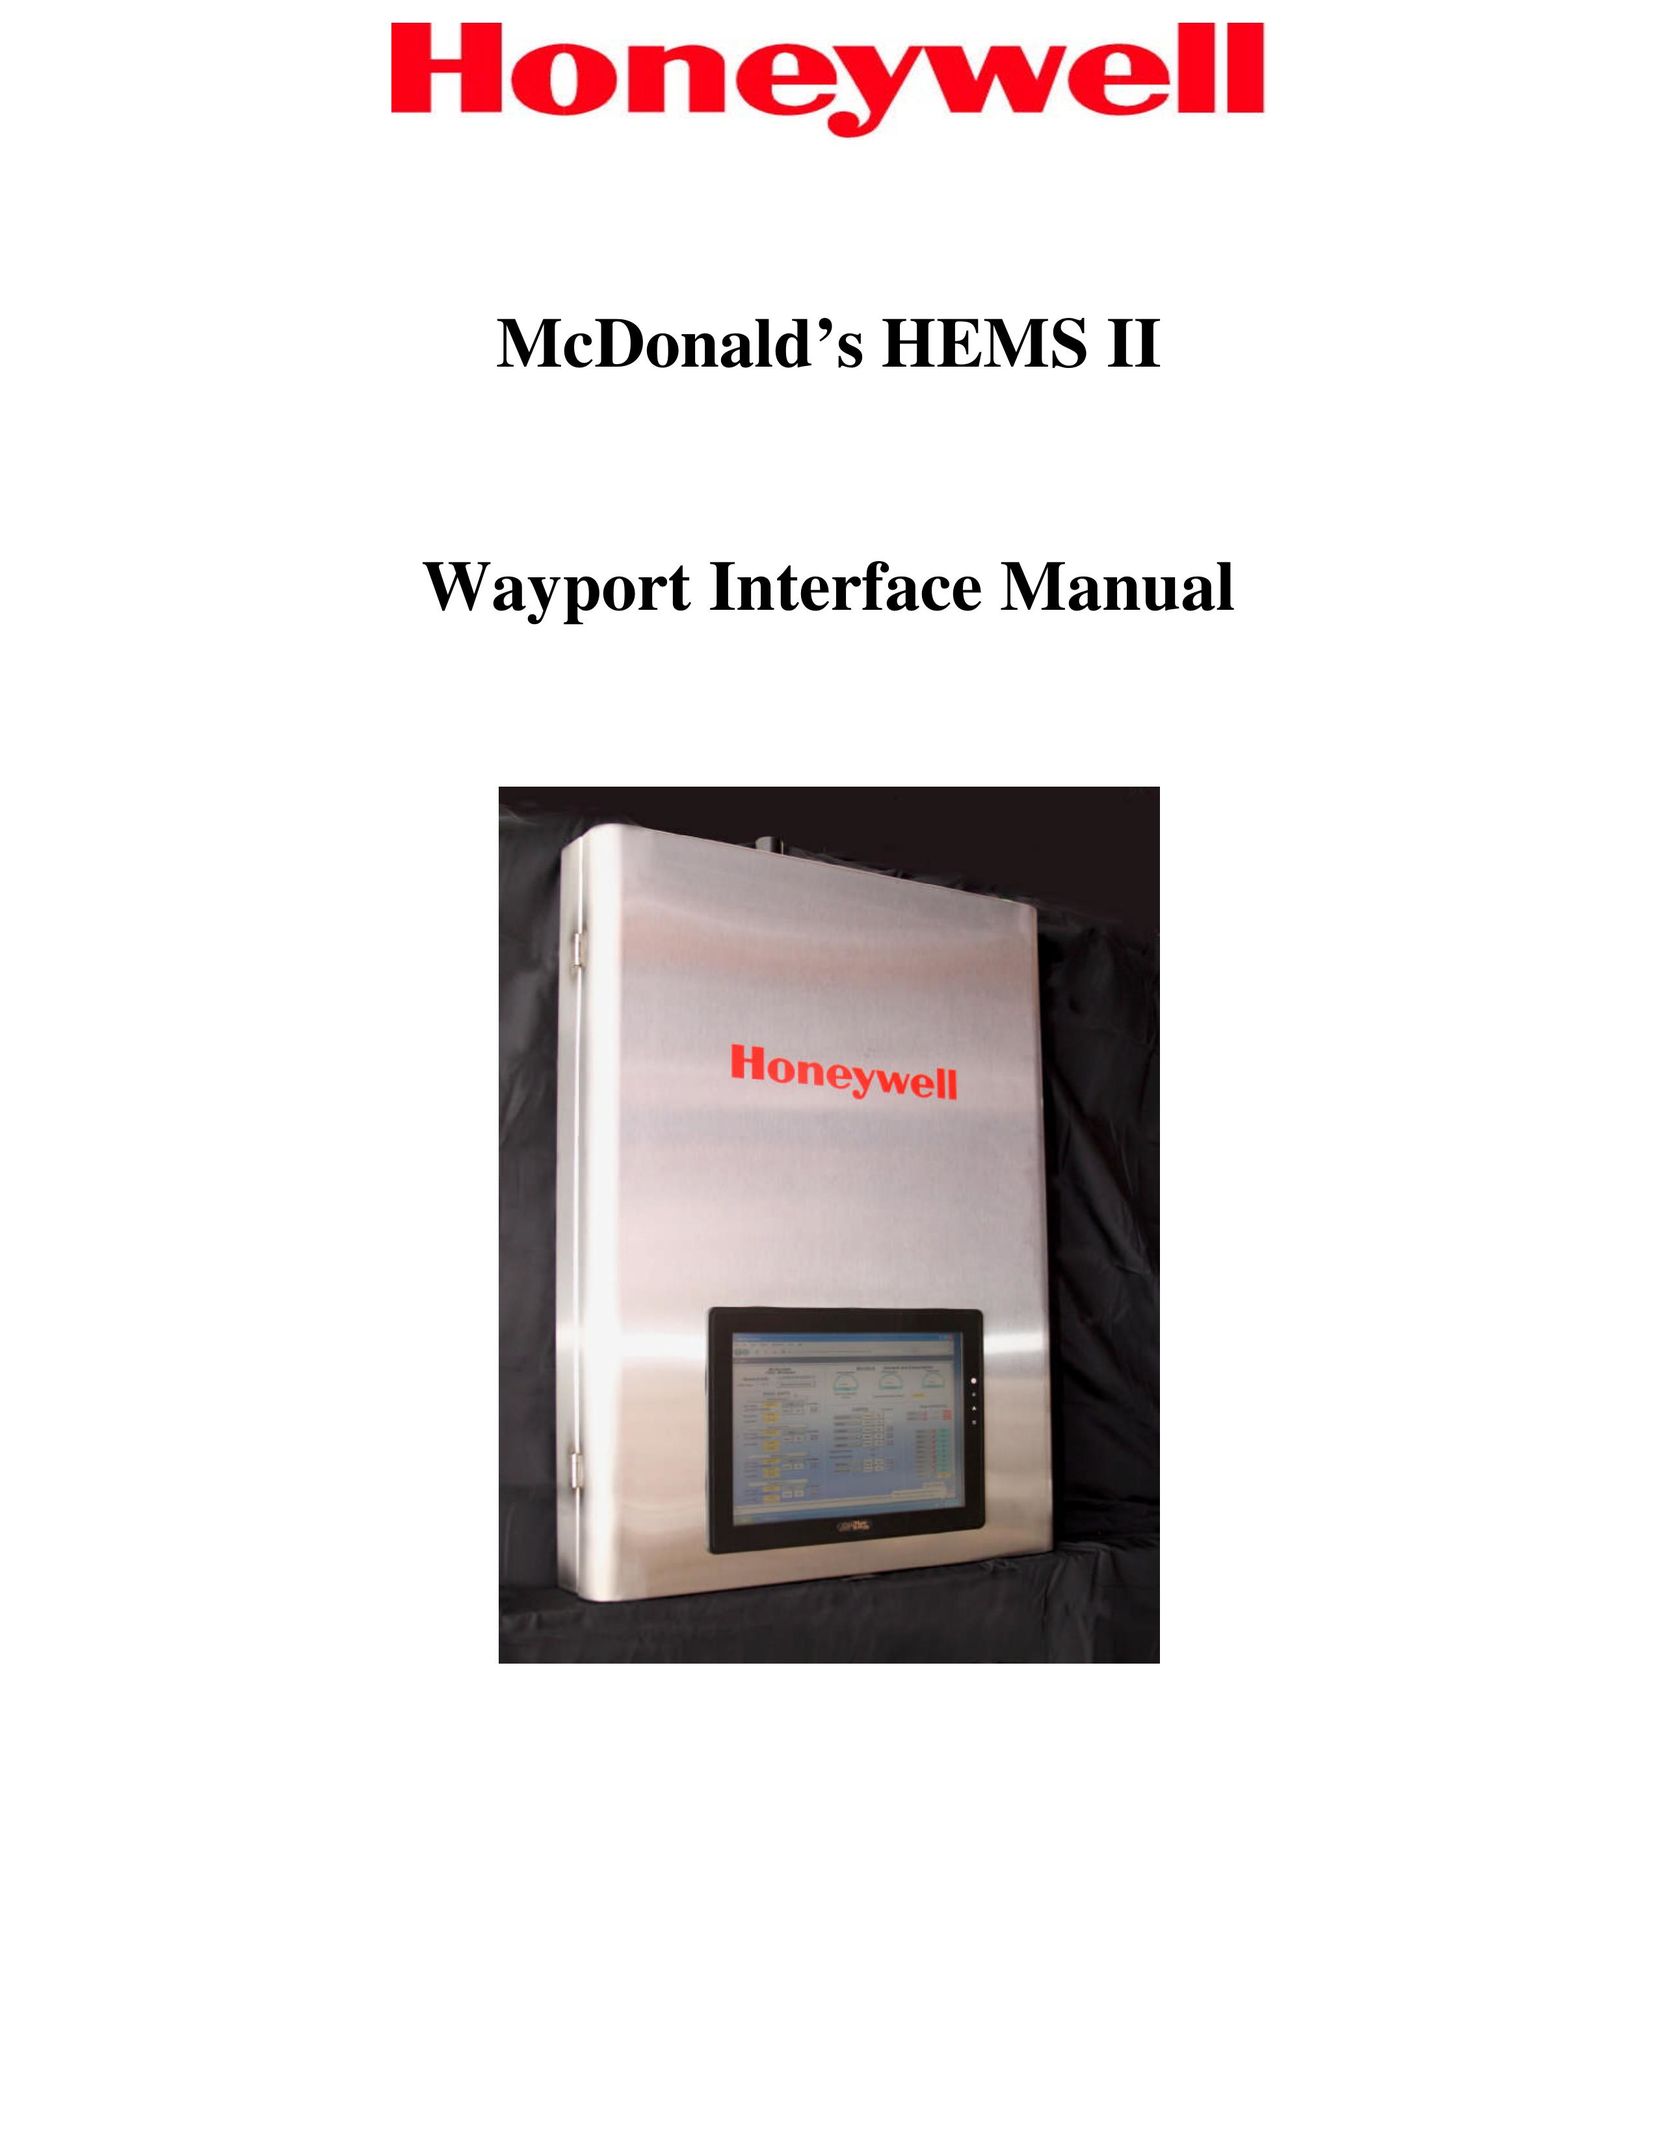 Honeywell HEMS II Network Hardware User Manual